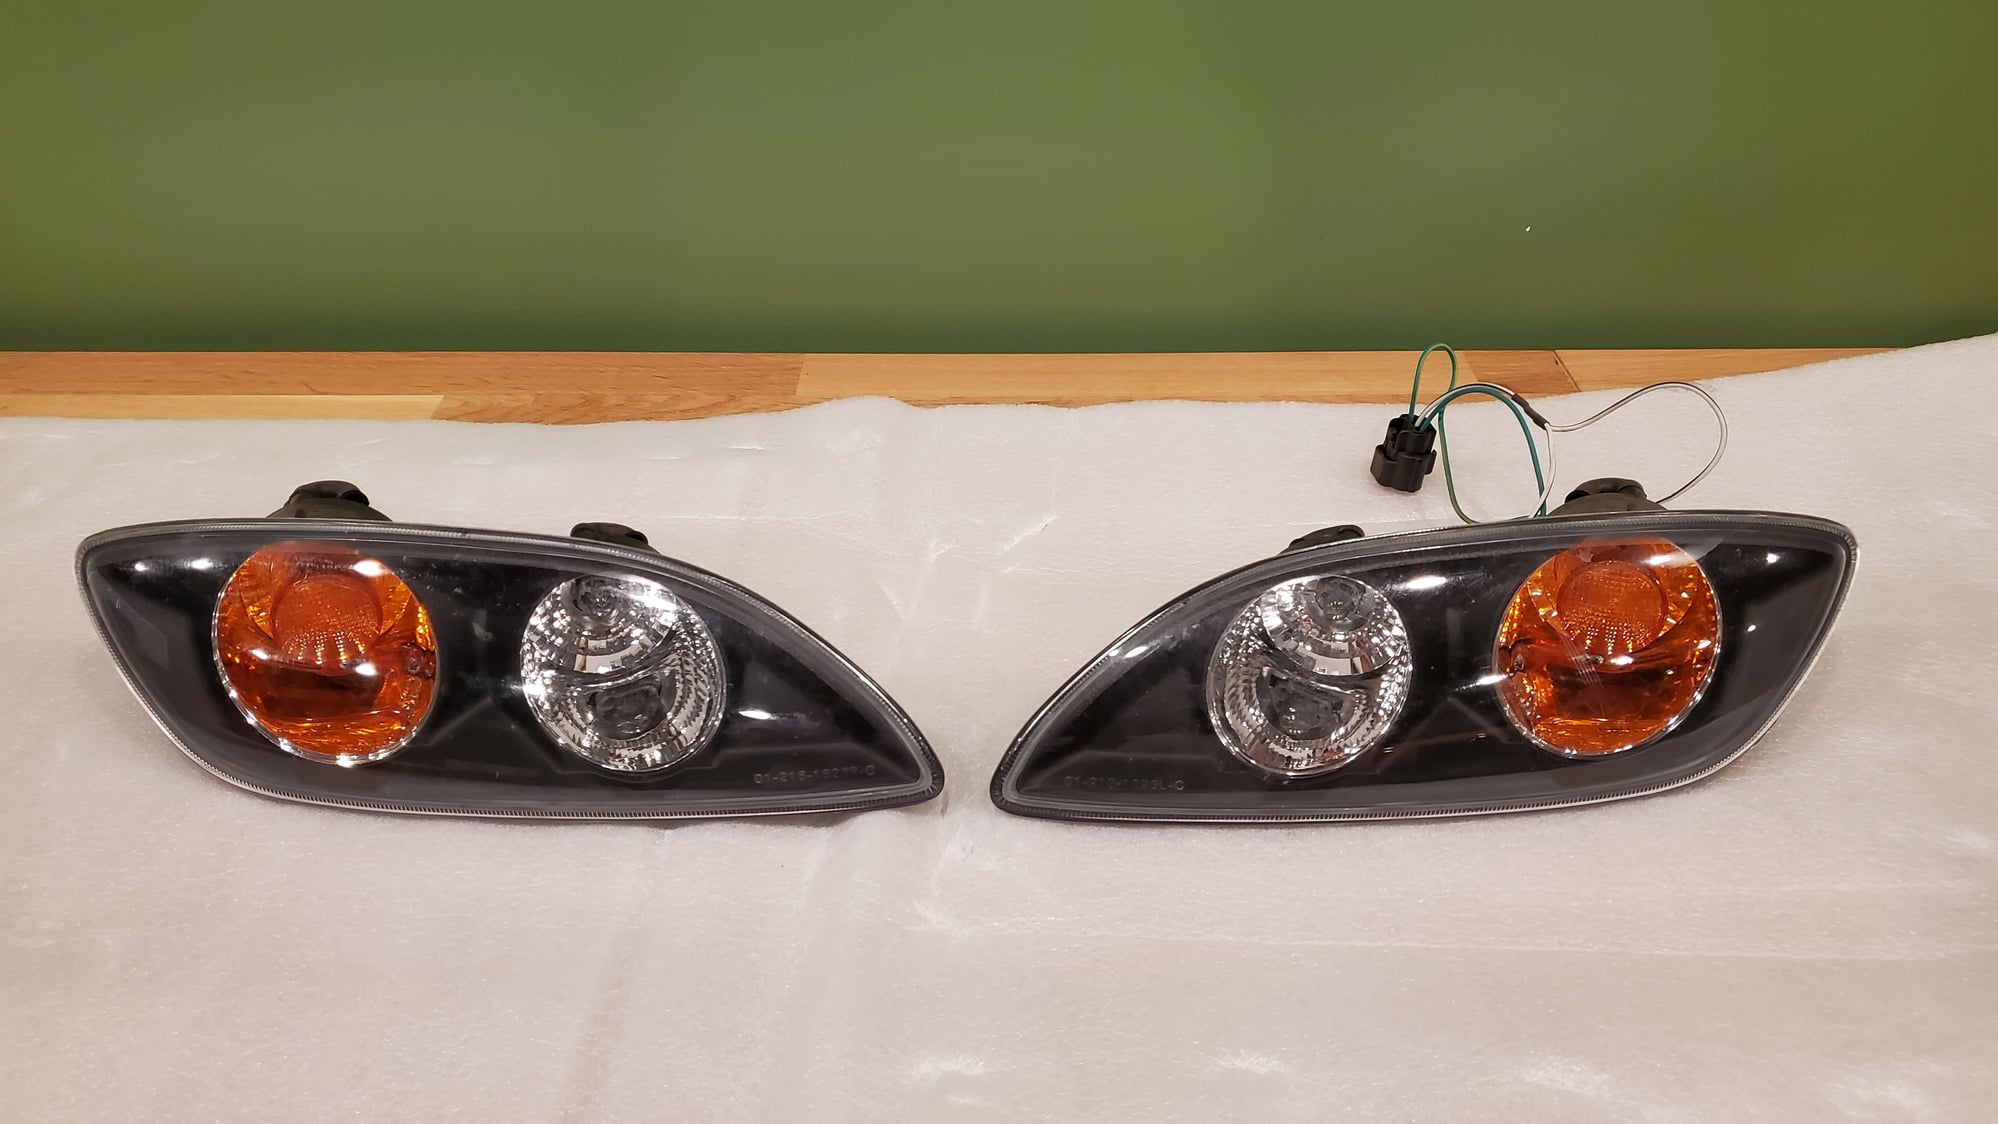 Lights - '99 front bumper lights - New - 1992 to 2002 Mazda RX-7 - Acworth, GA 30102, United States